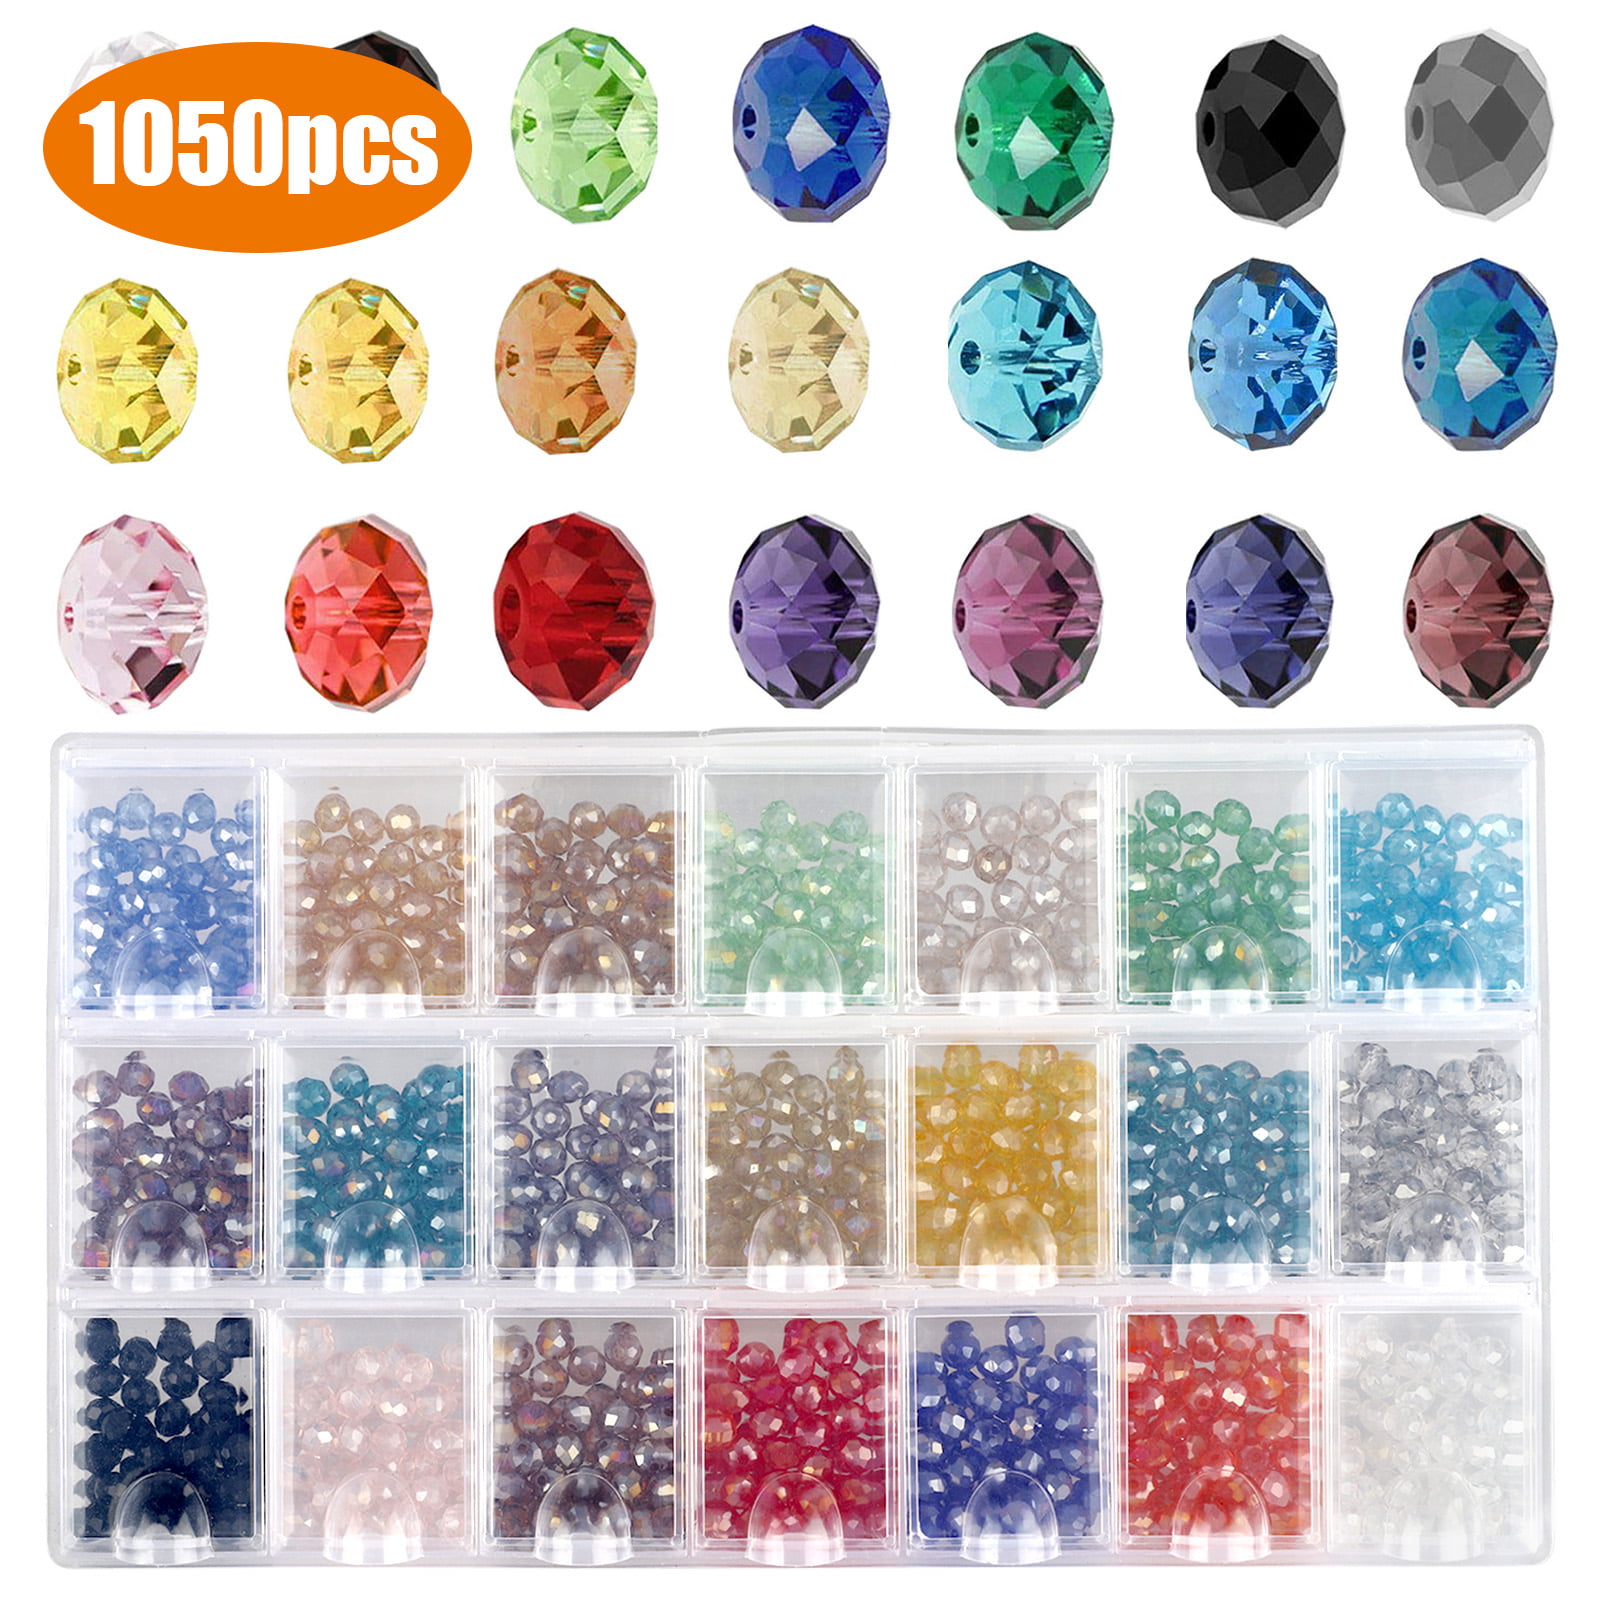 Wholesale 5x crystal Handmade glass teardrop bead pendants jewelry DIY Craft 